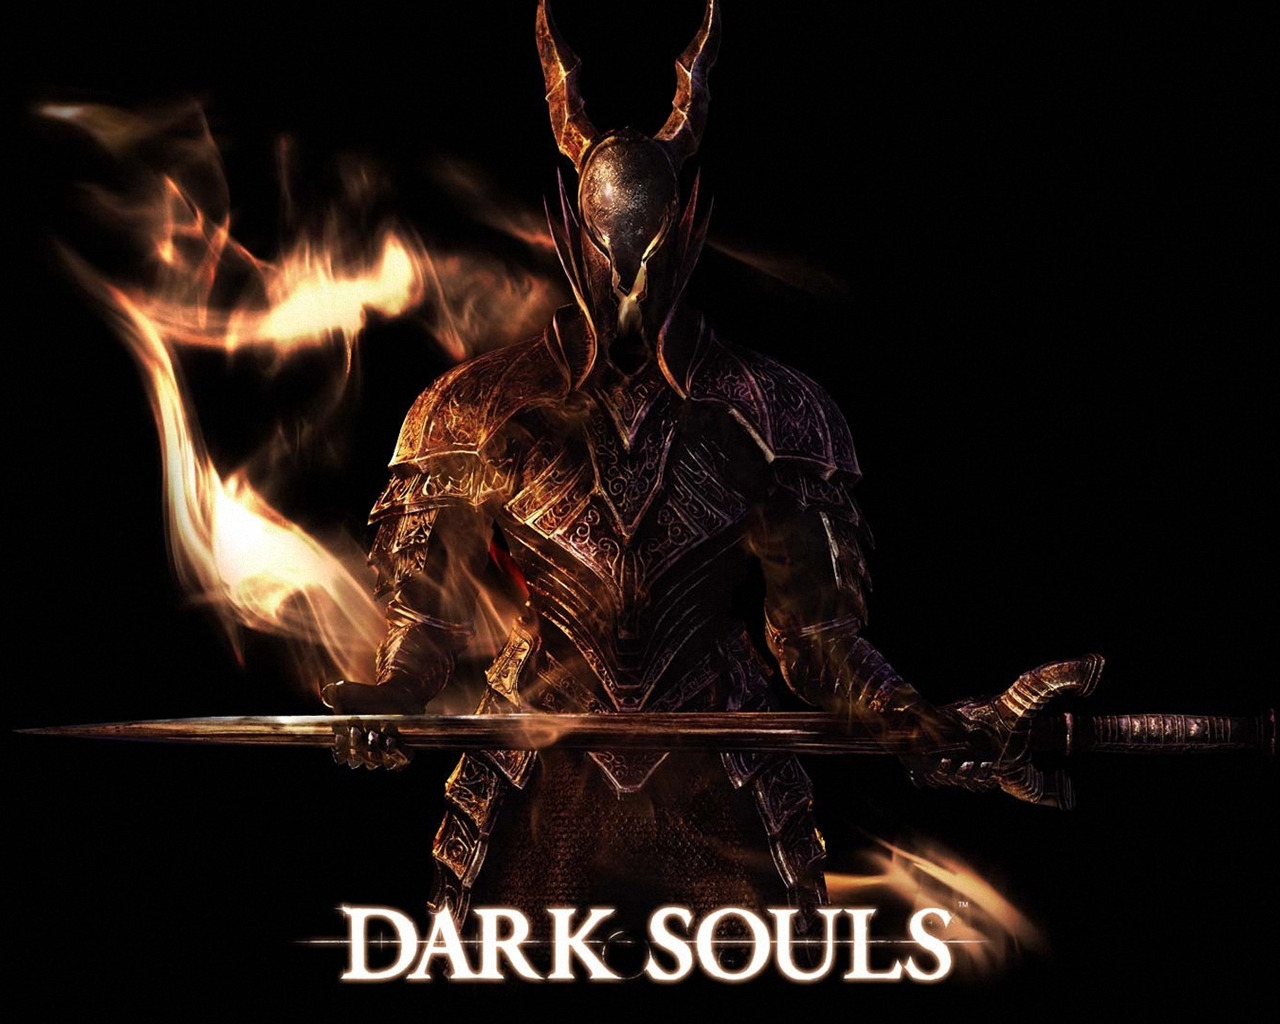 Dark Souls Art for 1280 x 1024 resolution